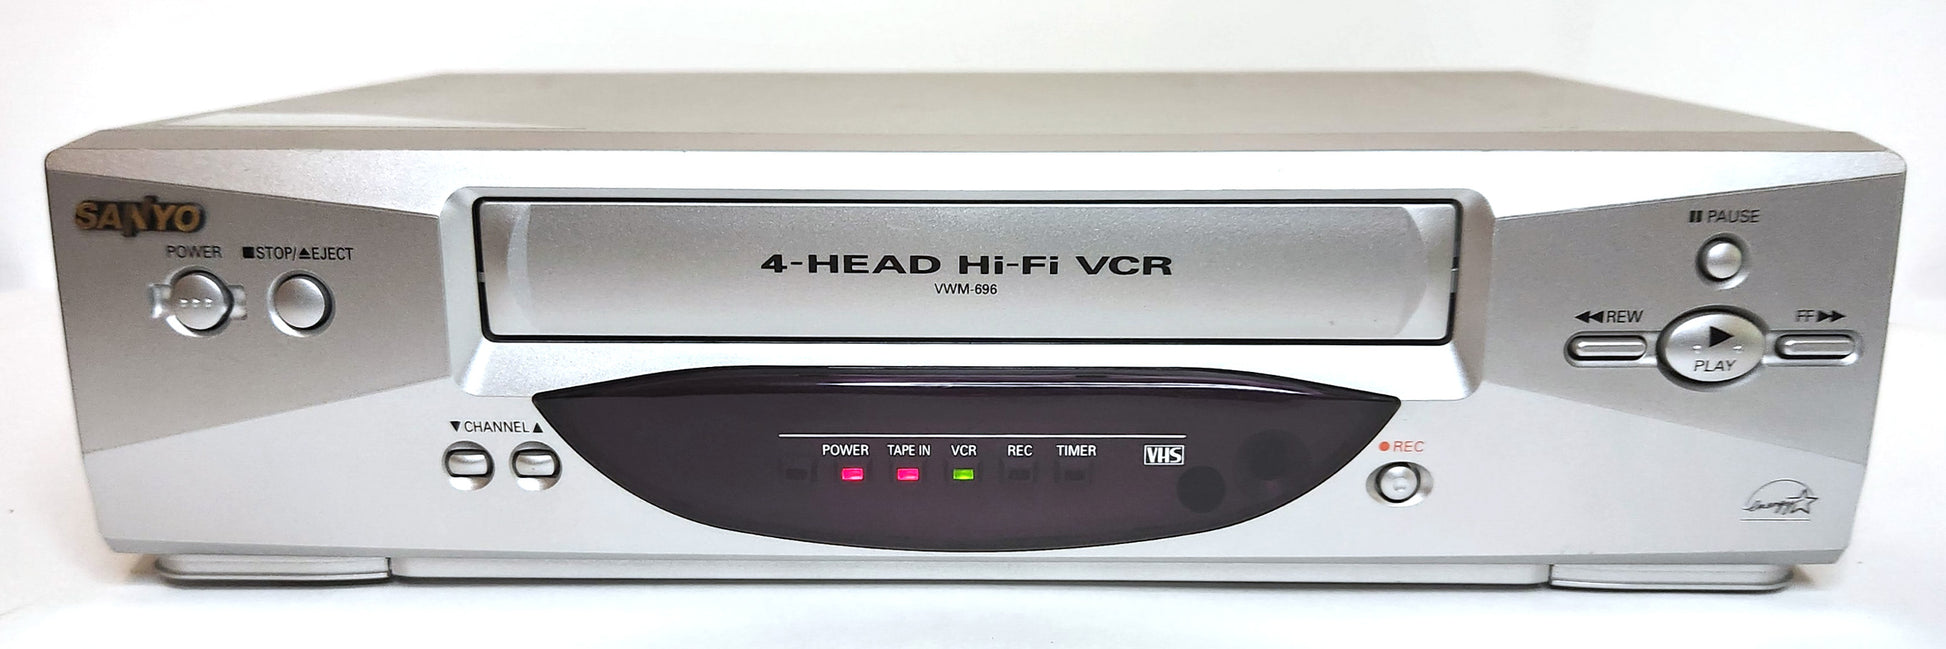 Sanyo VWM-696 VCR, 4-Head Hi-Fi Stereo - Front